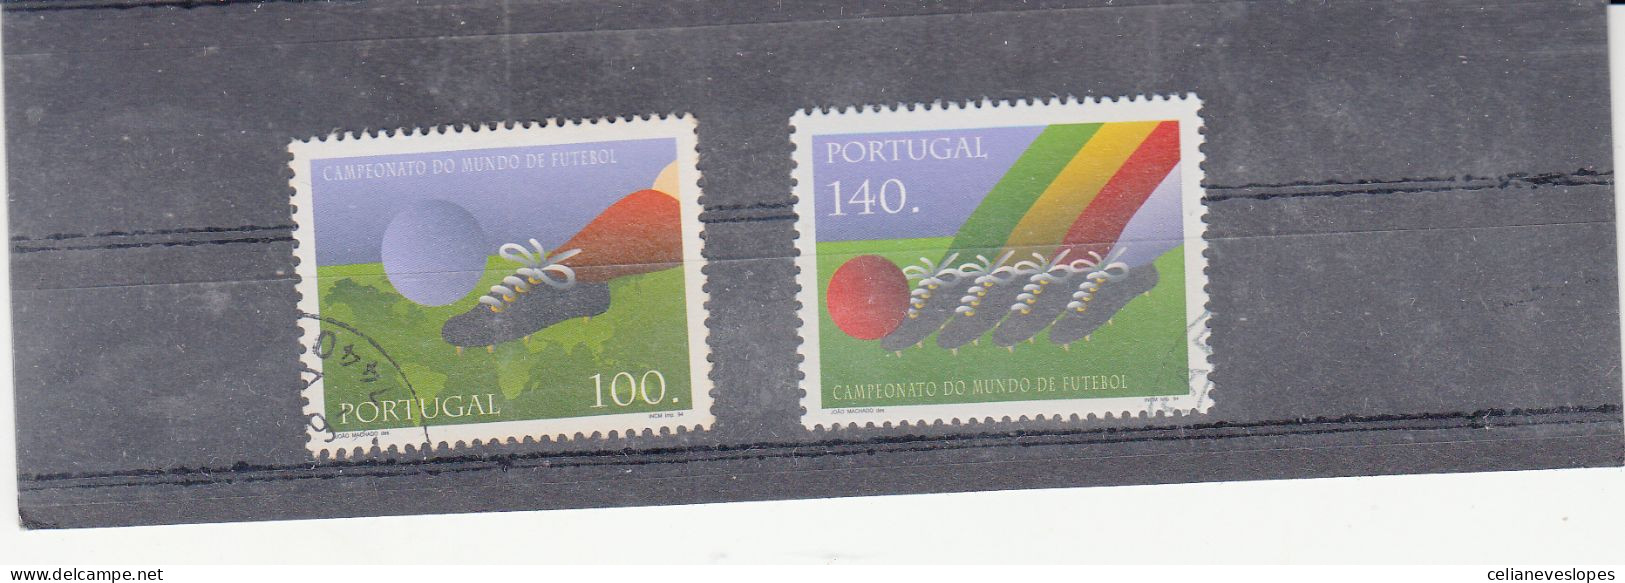 Portugal, Campeonato Do Mundo De Futebol, 1994, Mundifil Nº 2211 A 2212 Used - Used Stamps